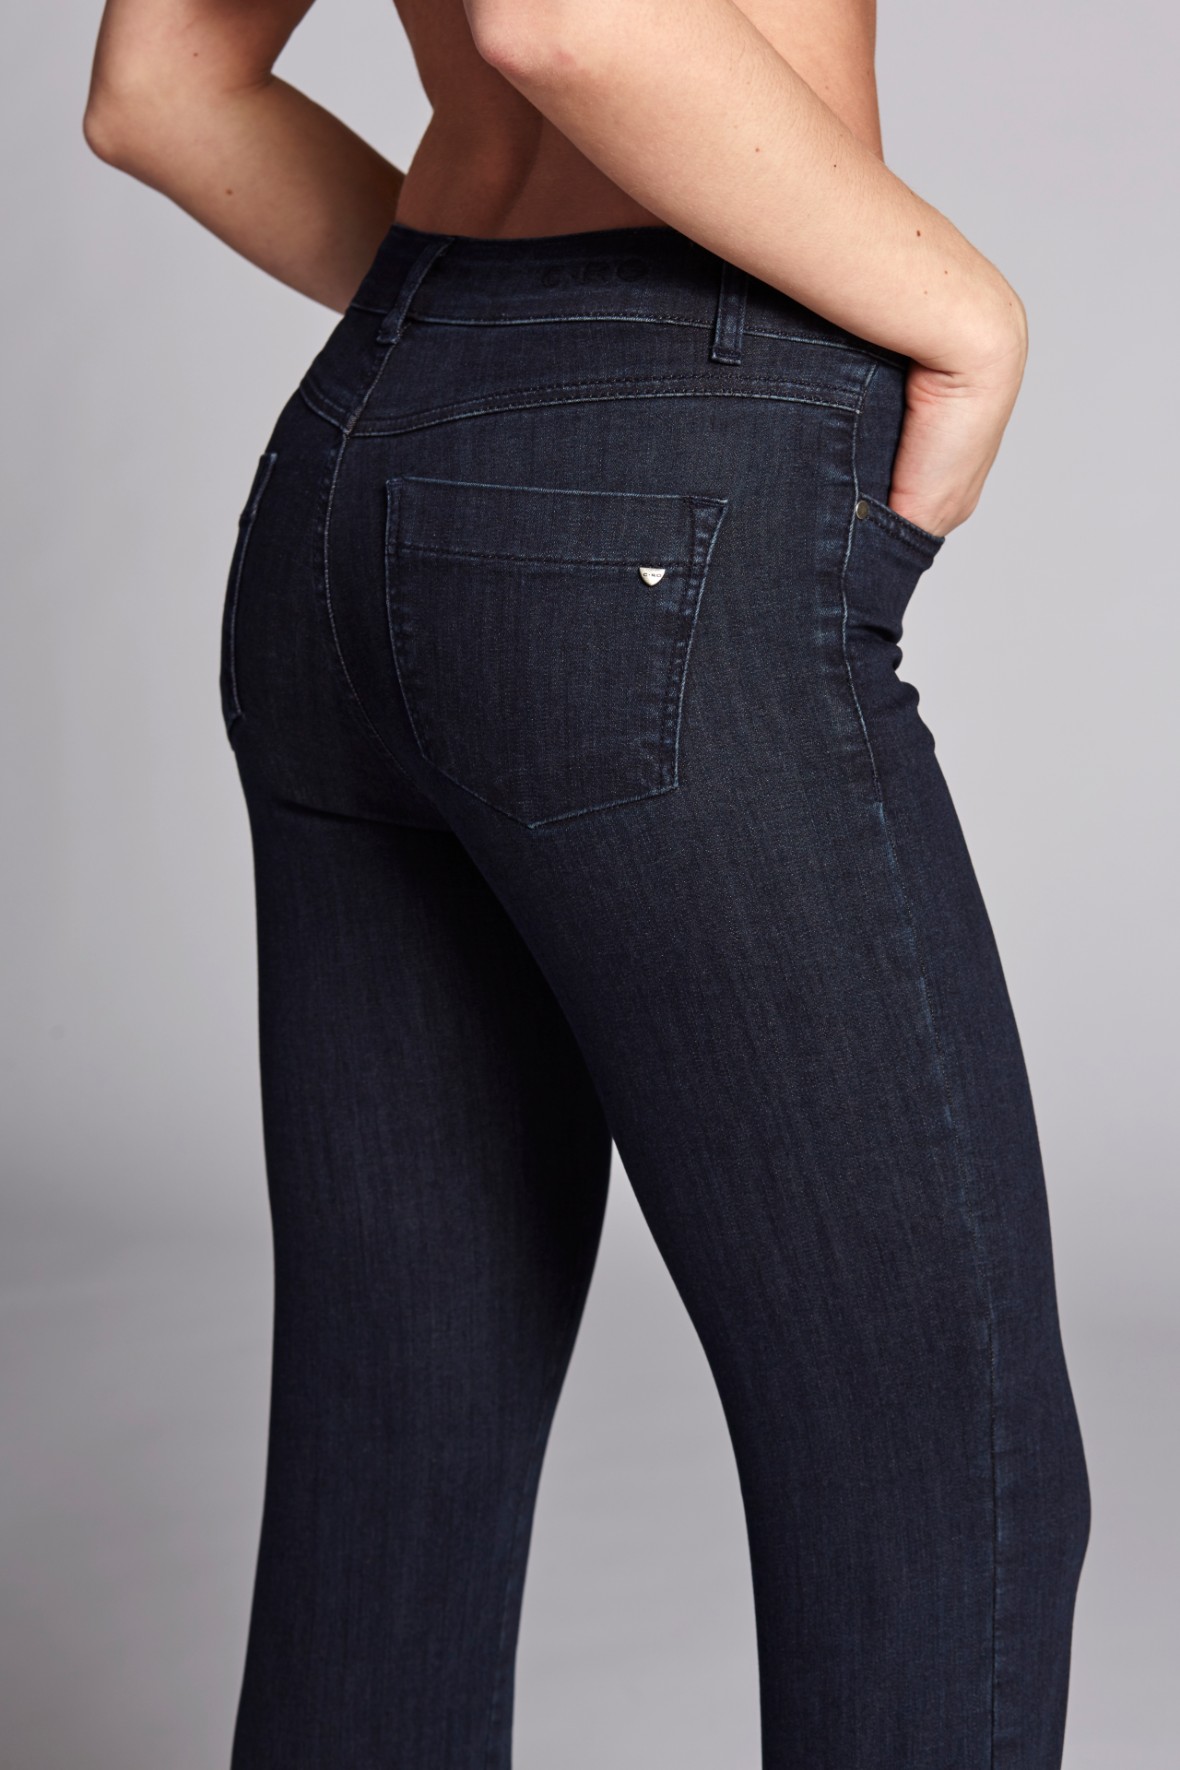 C-RO regular mørk jeans kvinder - Hos Lohse